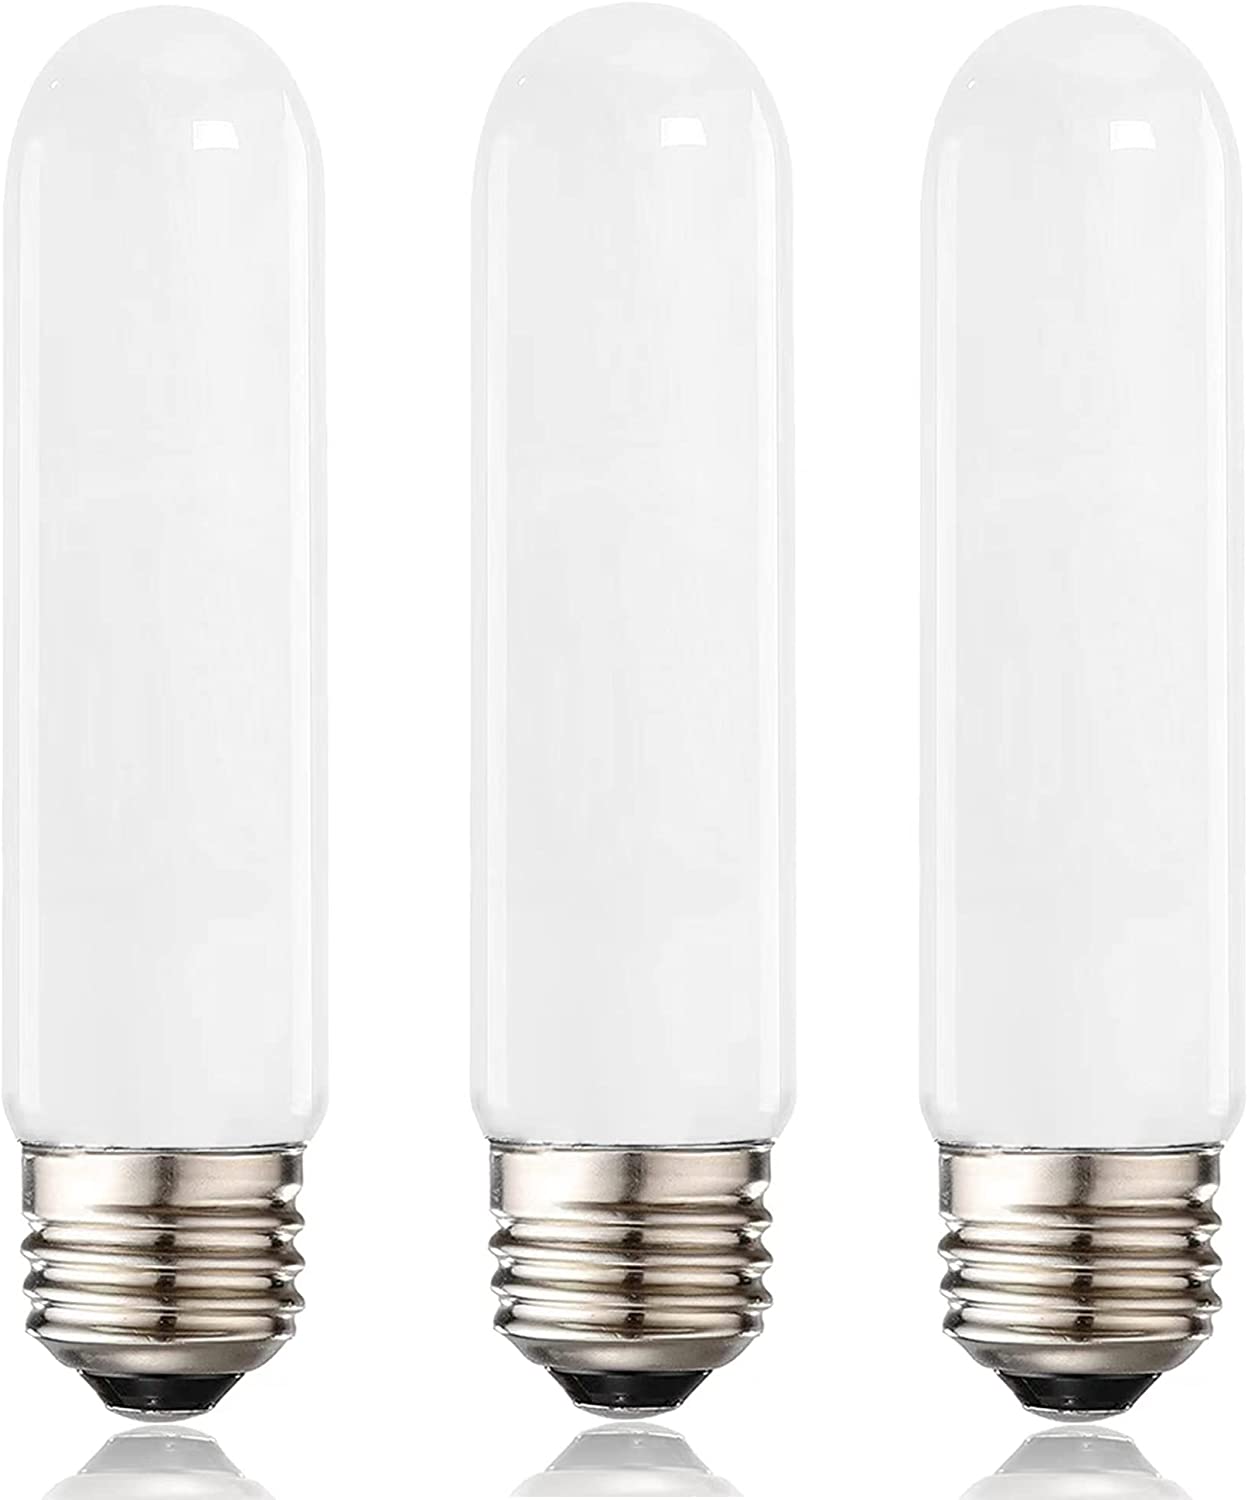 Dimmable Led Bulbs Tube WholeSale - Price List, Bulk Buy at